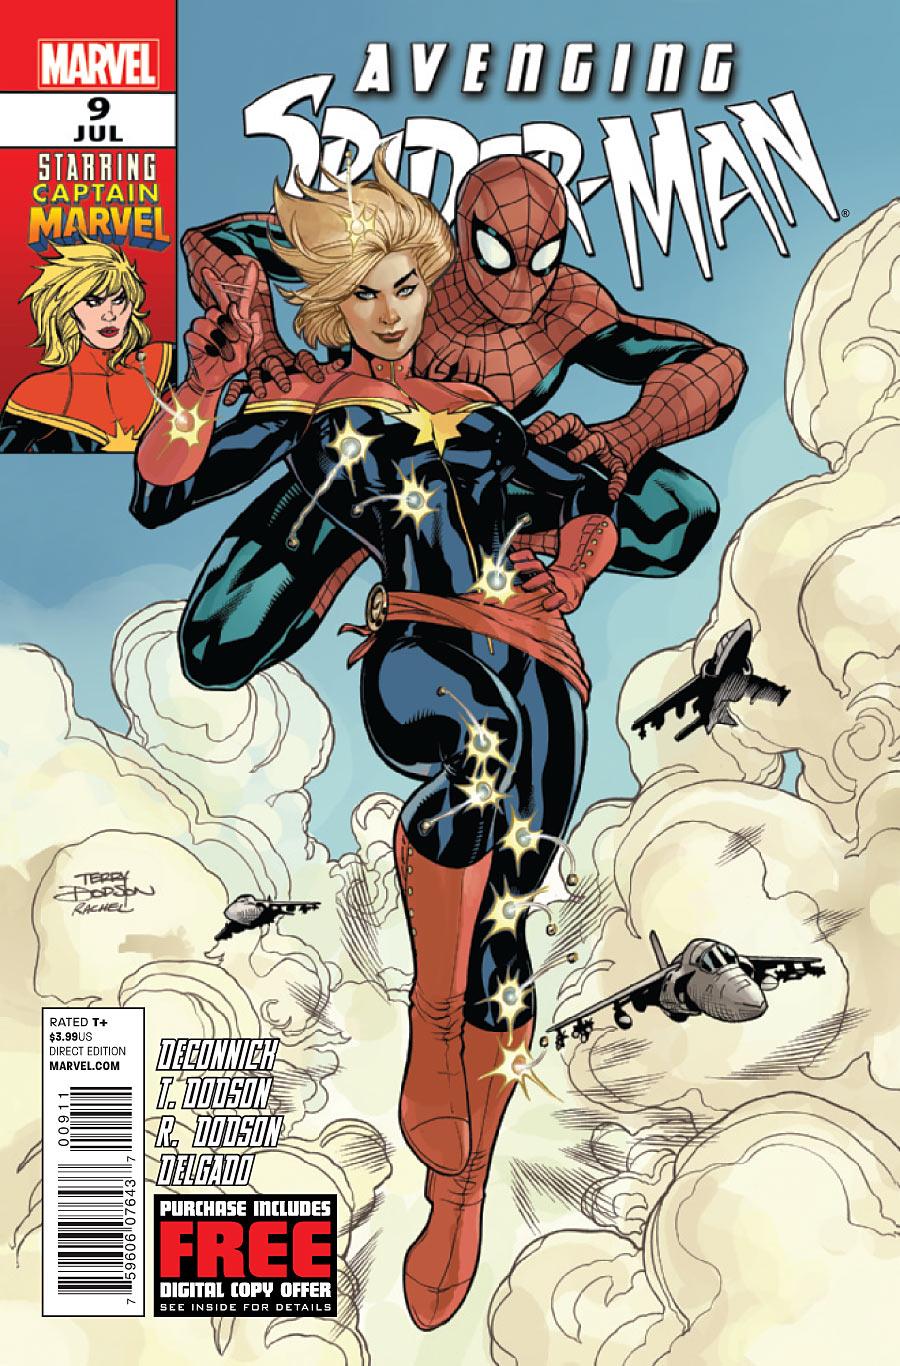 Avenging Spider-Man Vol. 1 #9